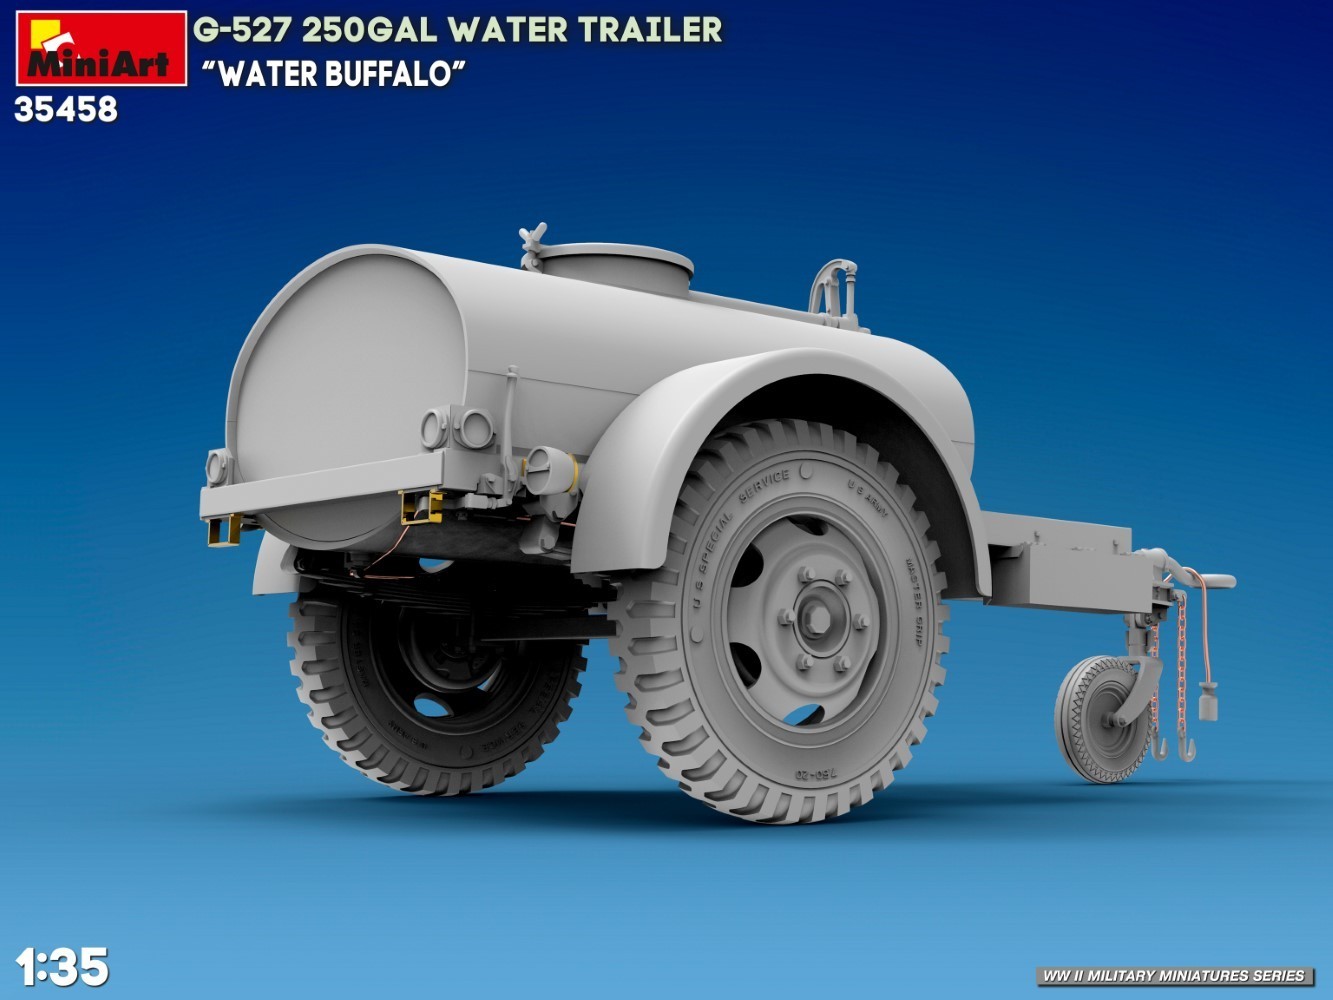 MiniArt G-527 250GAL Water Trailer “Water Buffalo” CAD-5